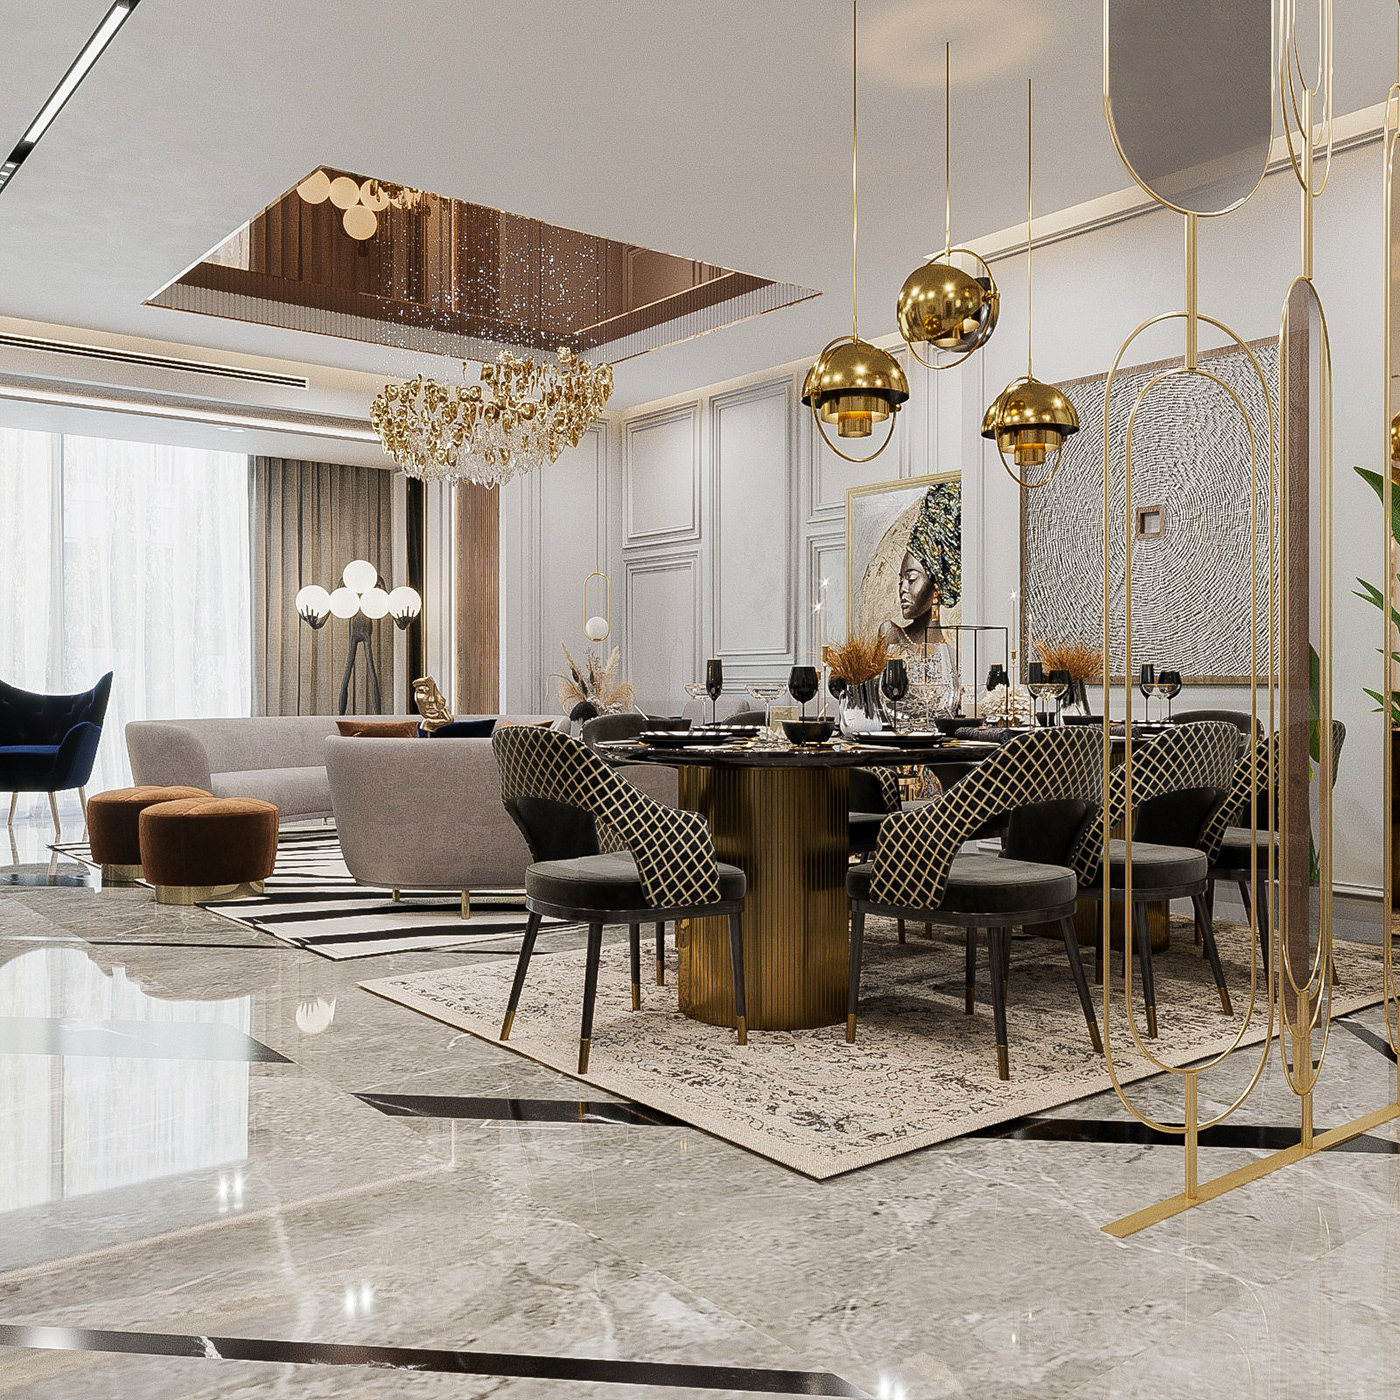 CGI contemporary corona modern reception Render interior design  modeling visualization